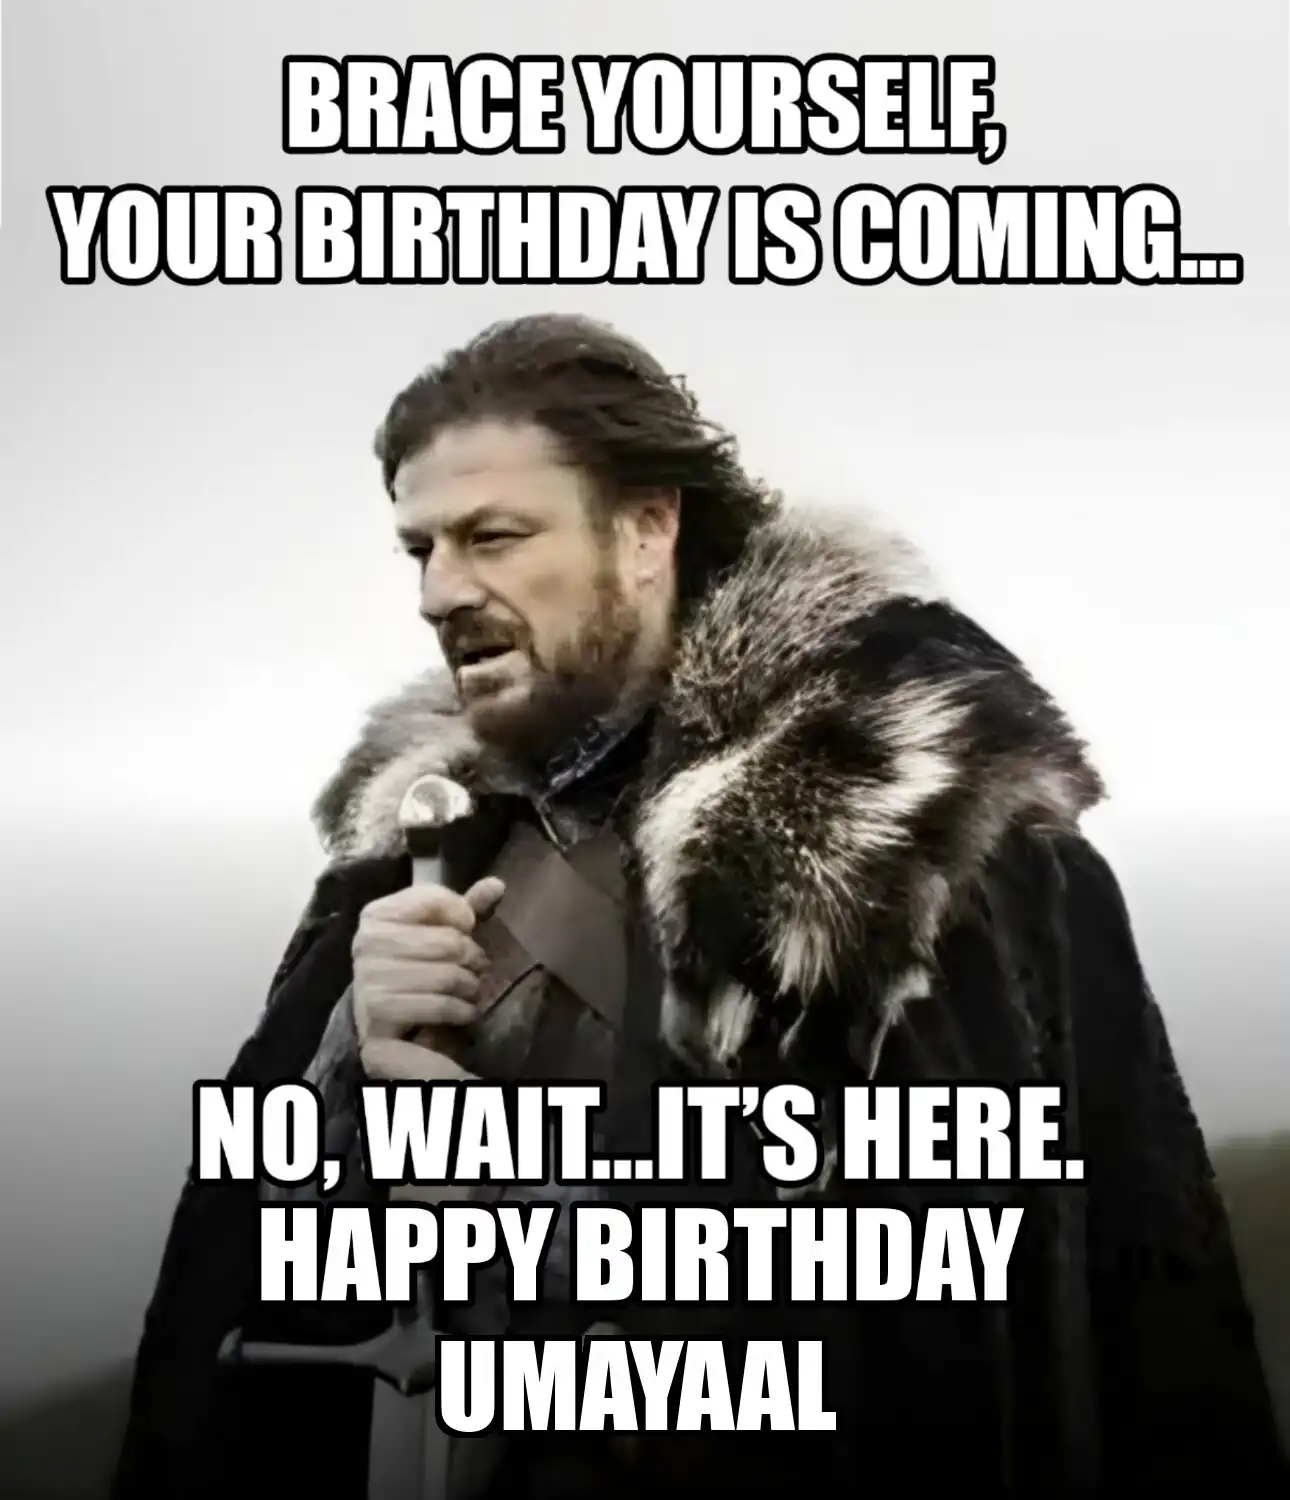 Happy Birthday Umayaal Brace Yourself Your Birthday Is Coming Meme